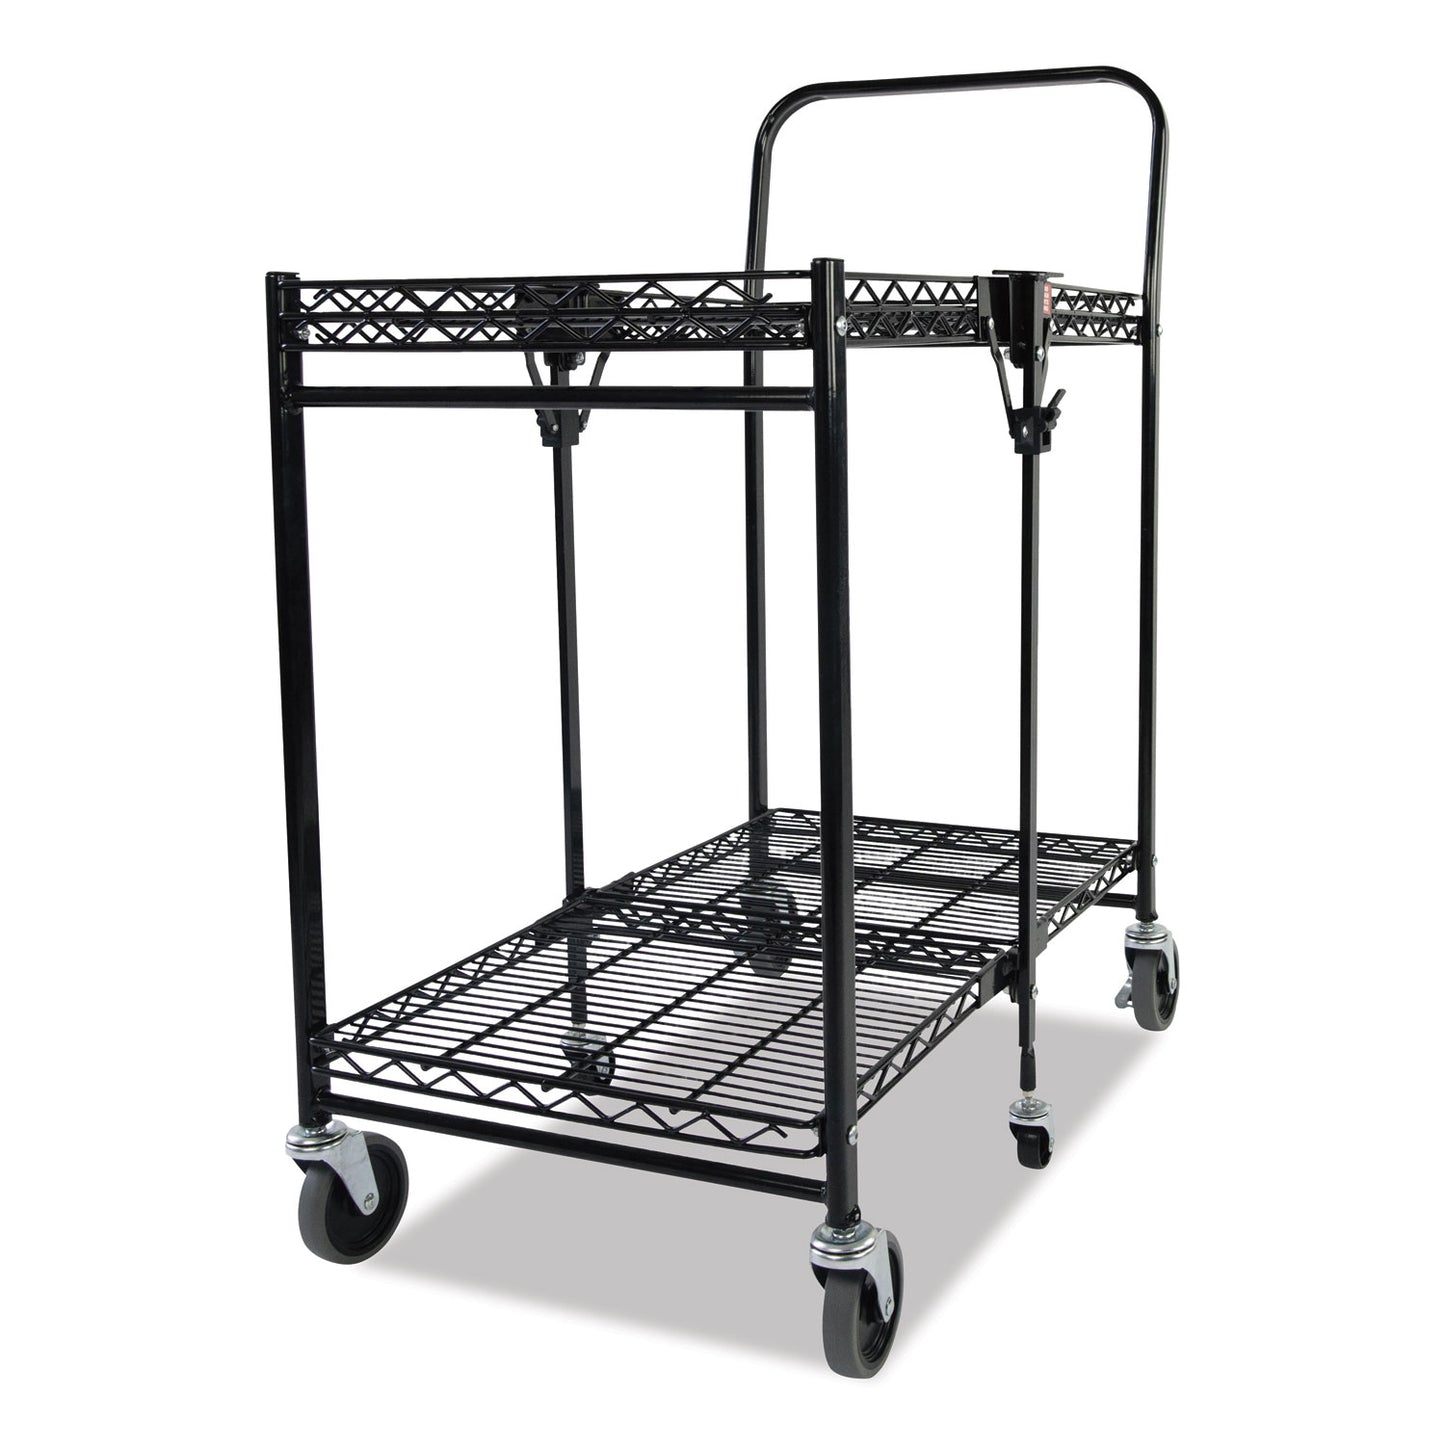 Bostitch Stowaway Folding Carts, 2 Shelves, 29.63w x 37.25d x 18h, Black, 250 lb Capacity BSAC-SM-BLACK